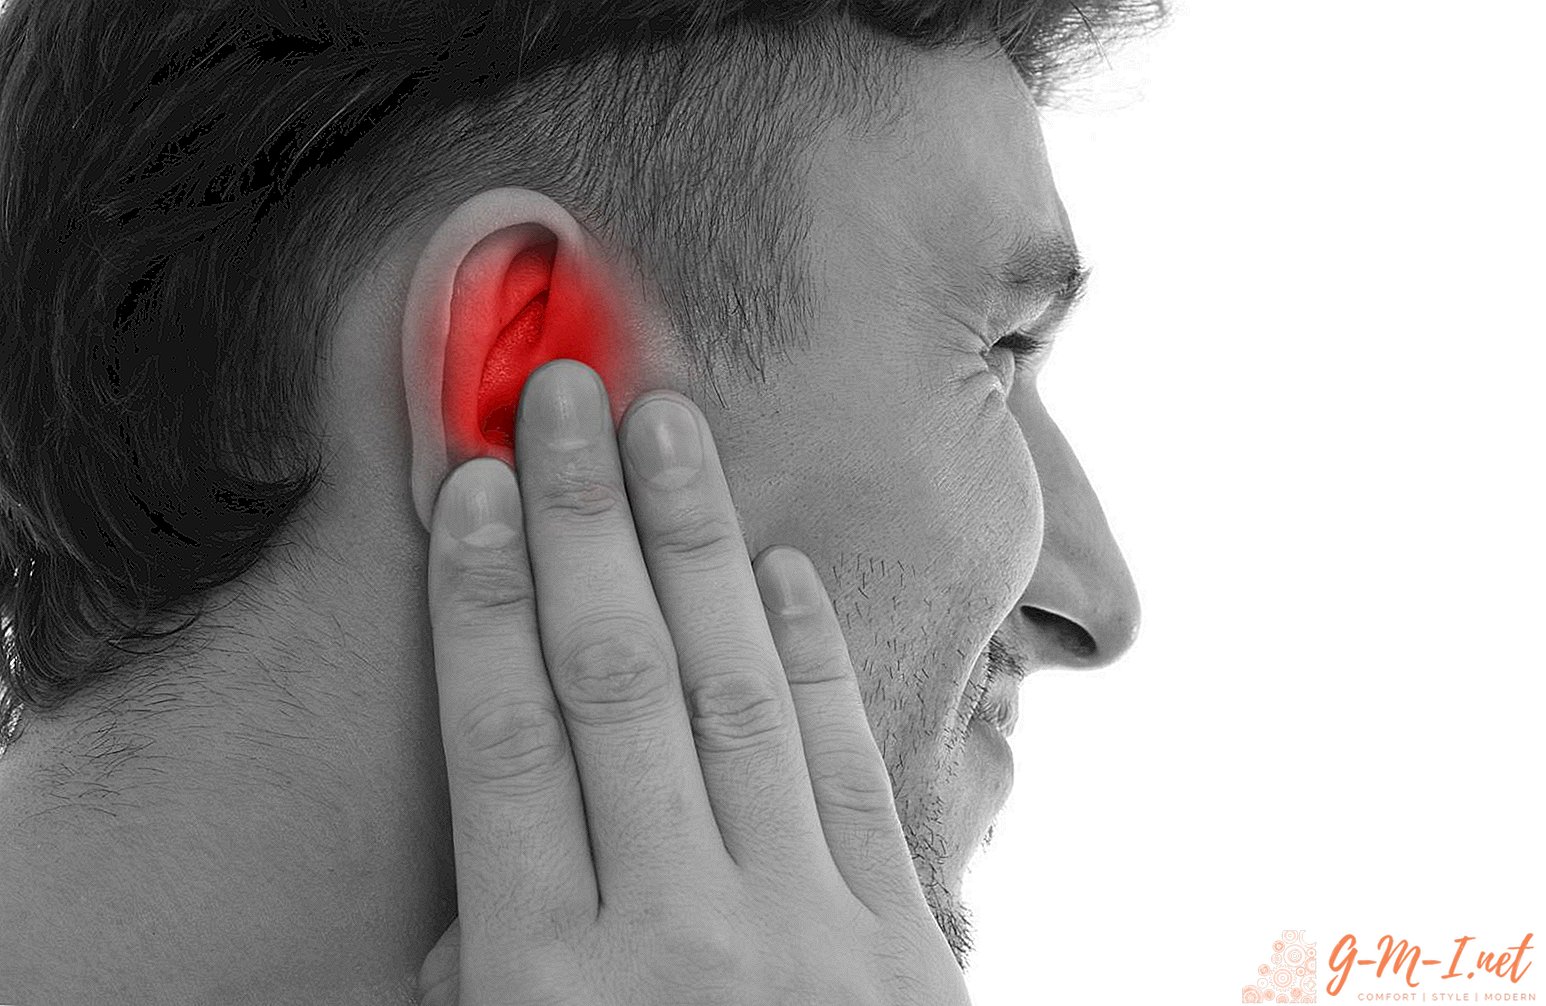 Why do earplugs hurt?